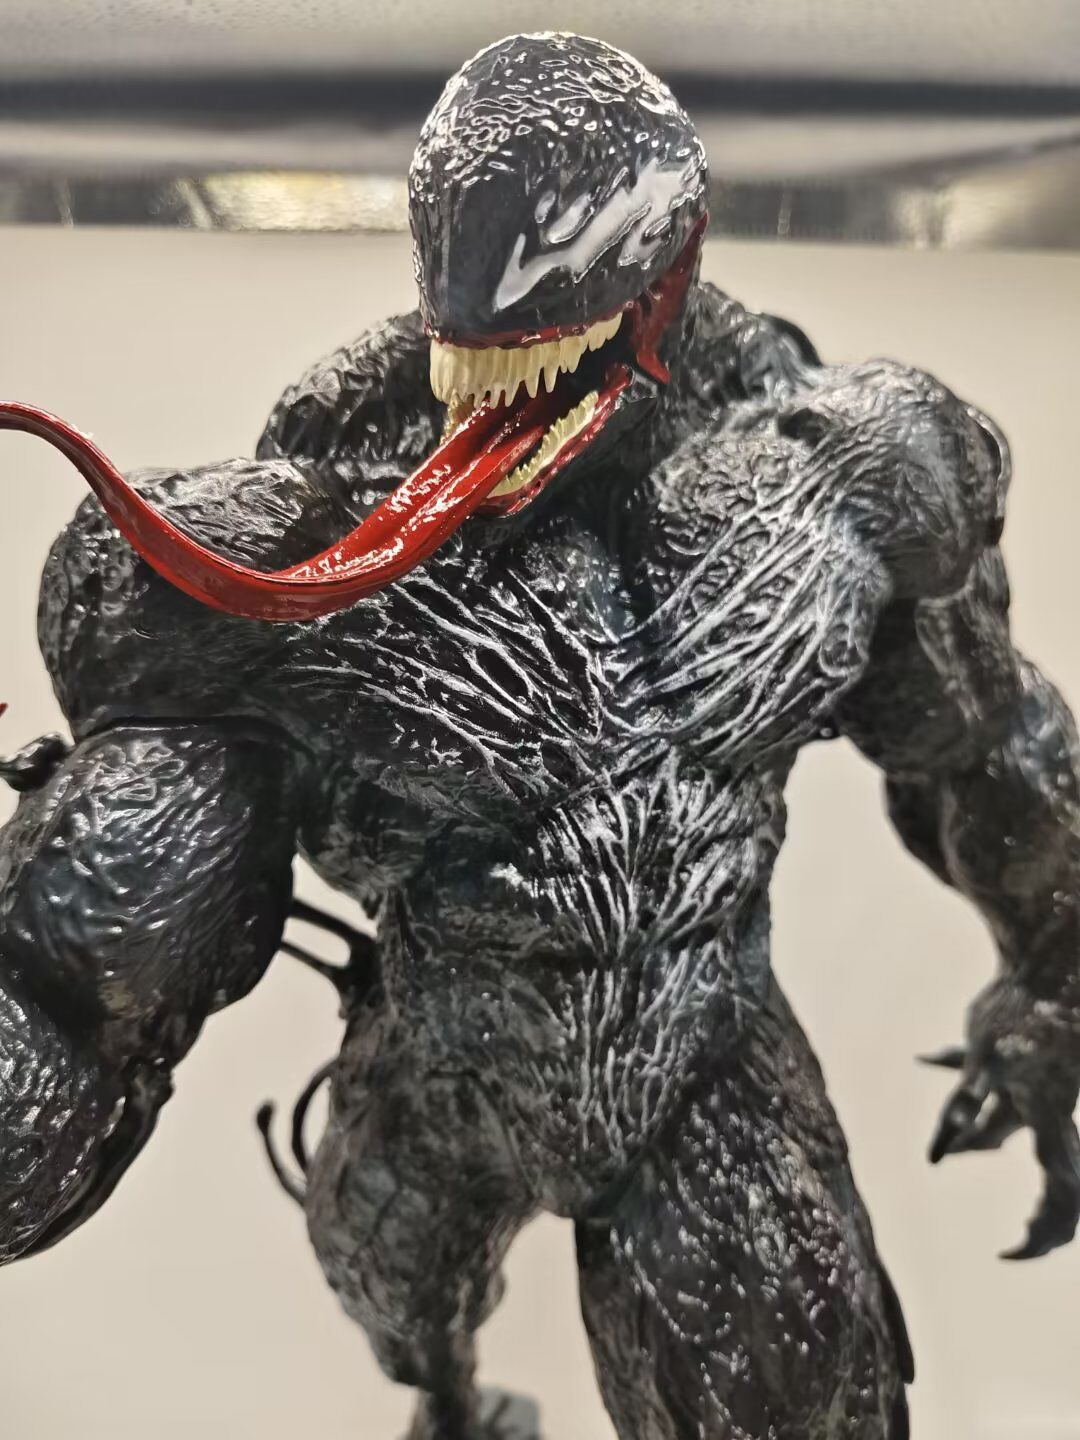 Avengers Spider-Man Venom Standing Posture 1/3 High 50cm Large Statue Model